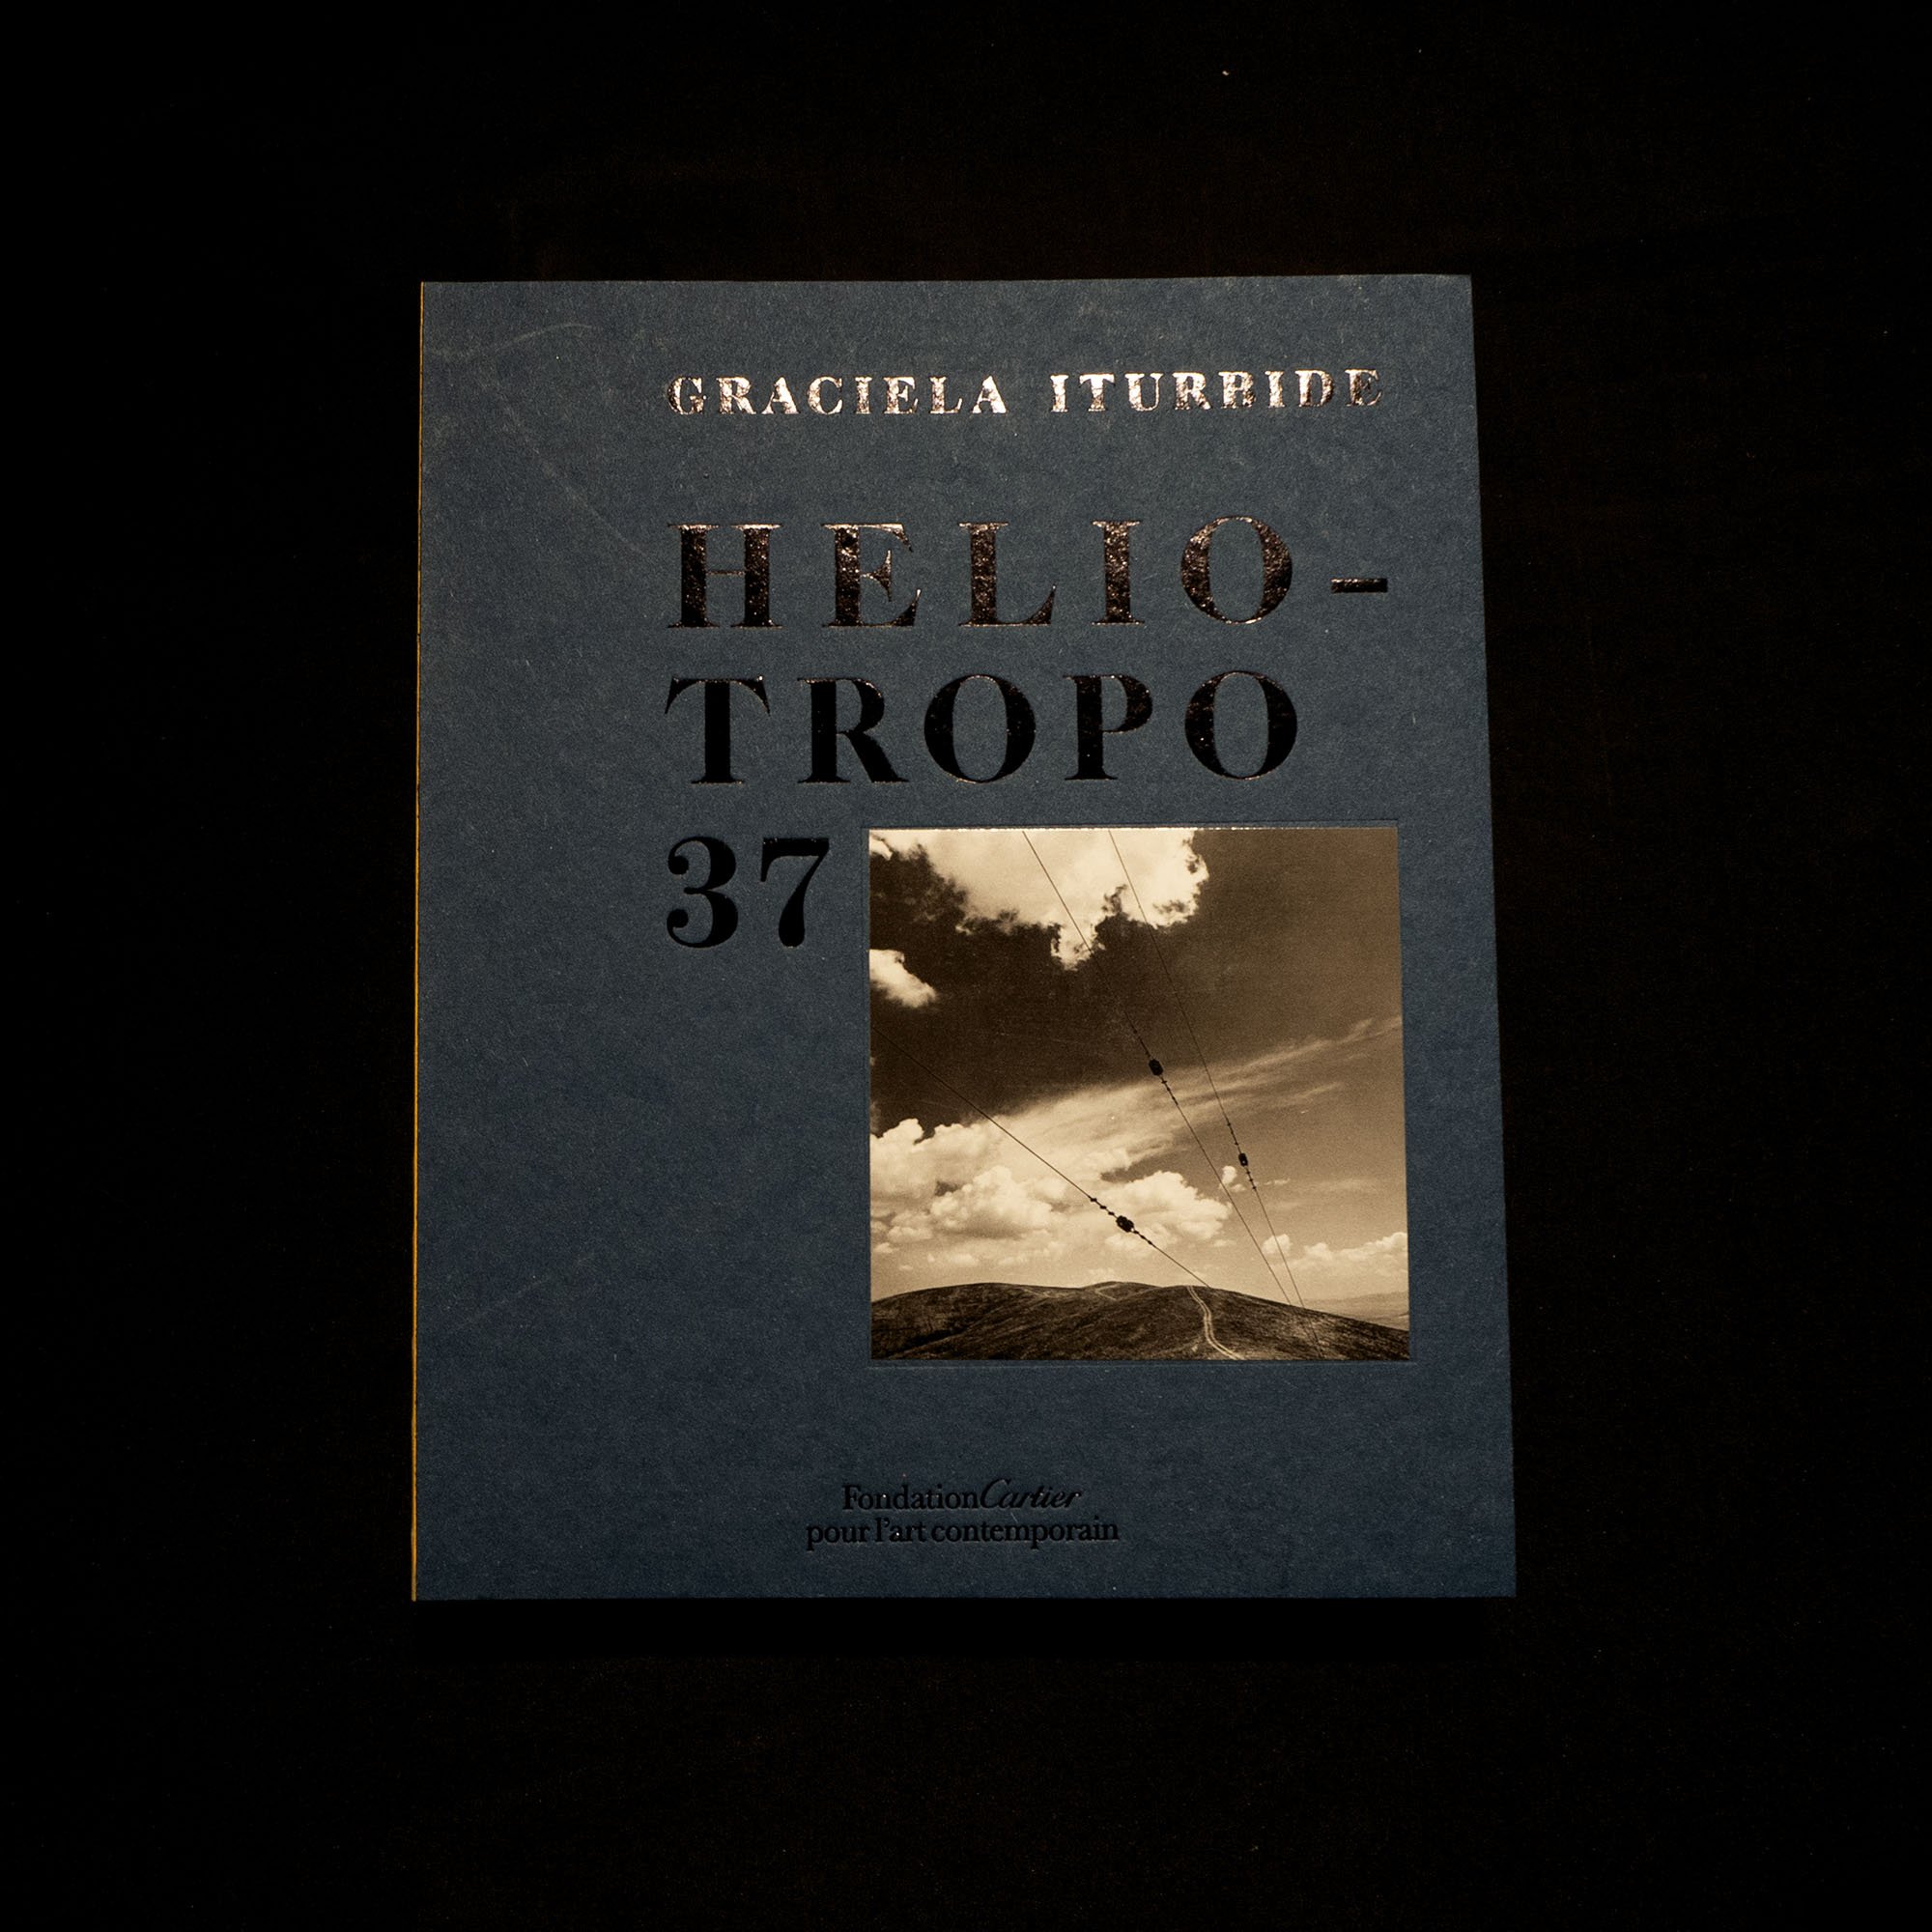 HELIOTROPO 37 - Graciela Iturbide